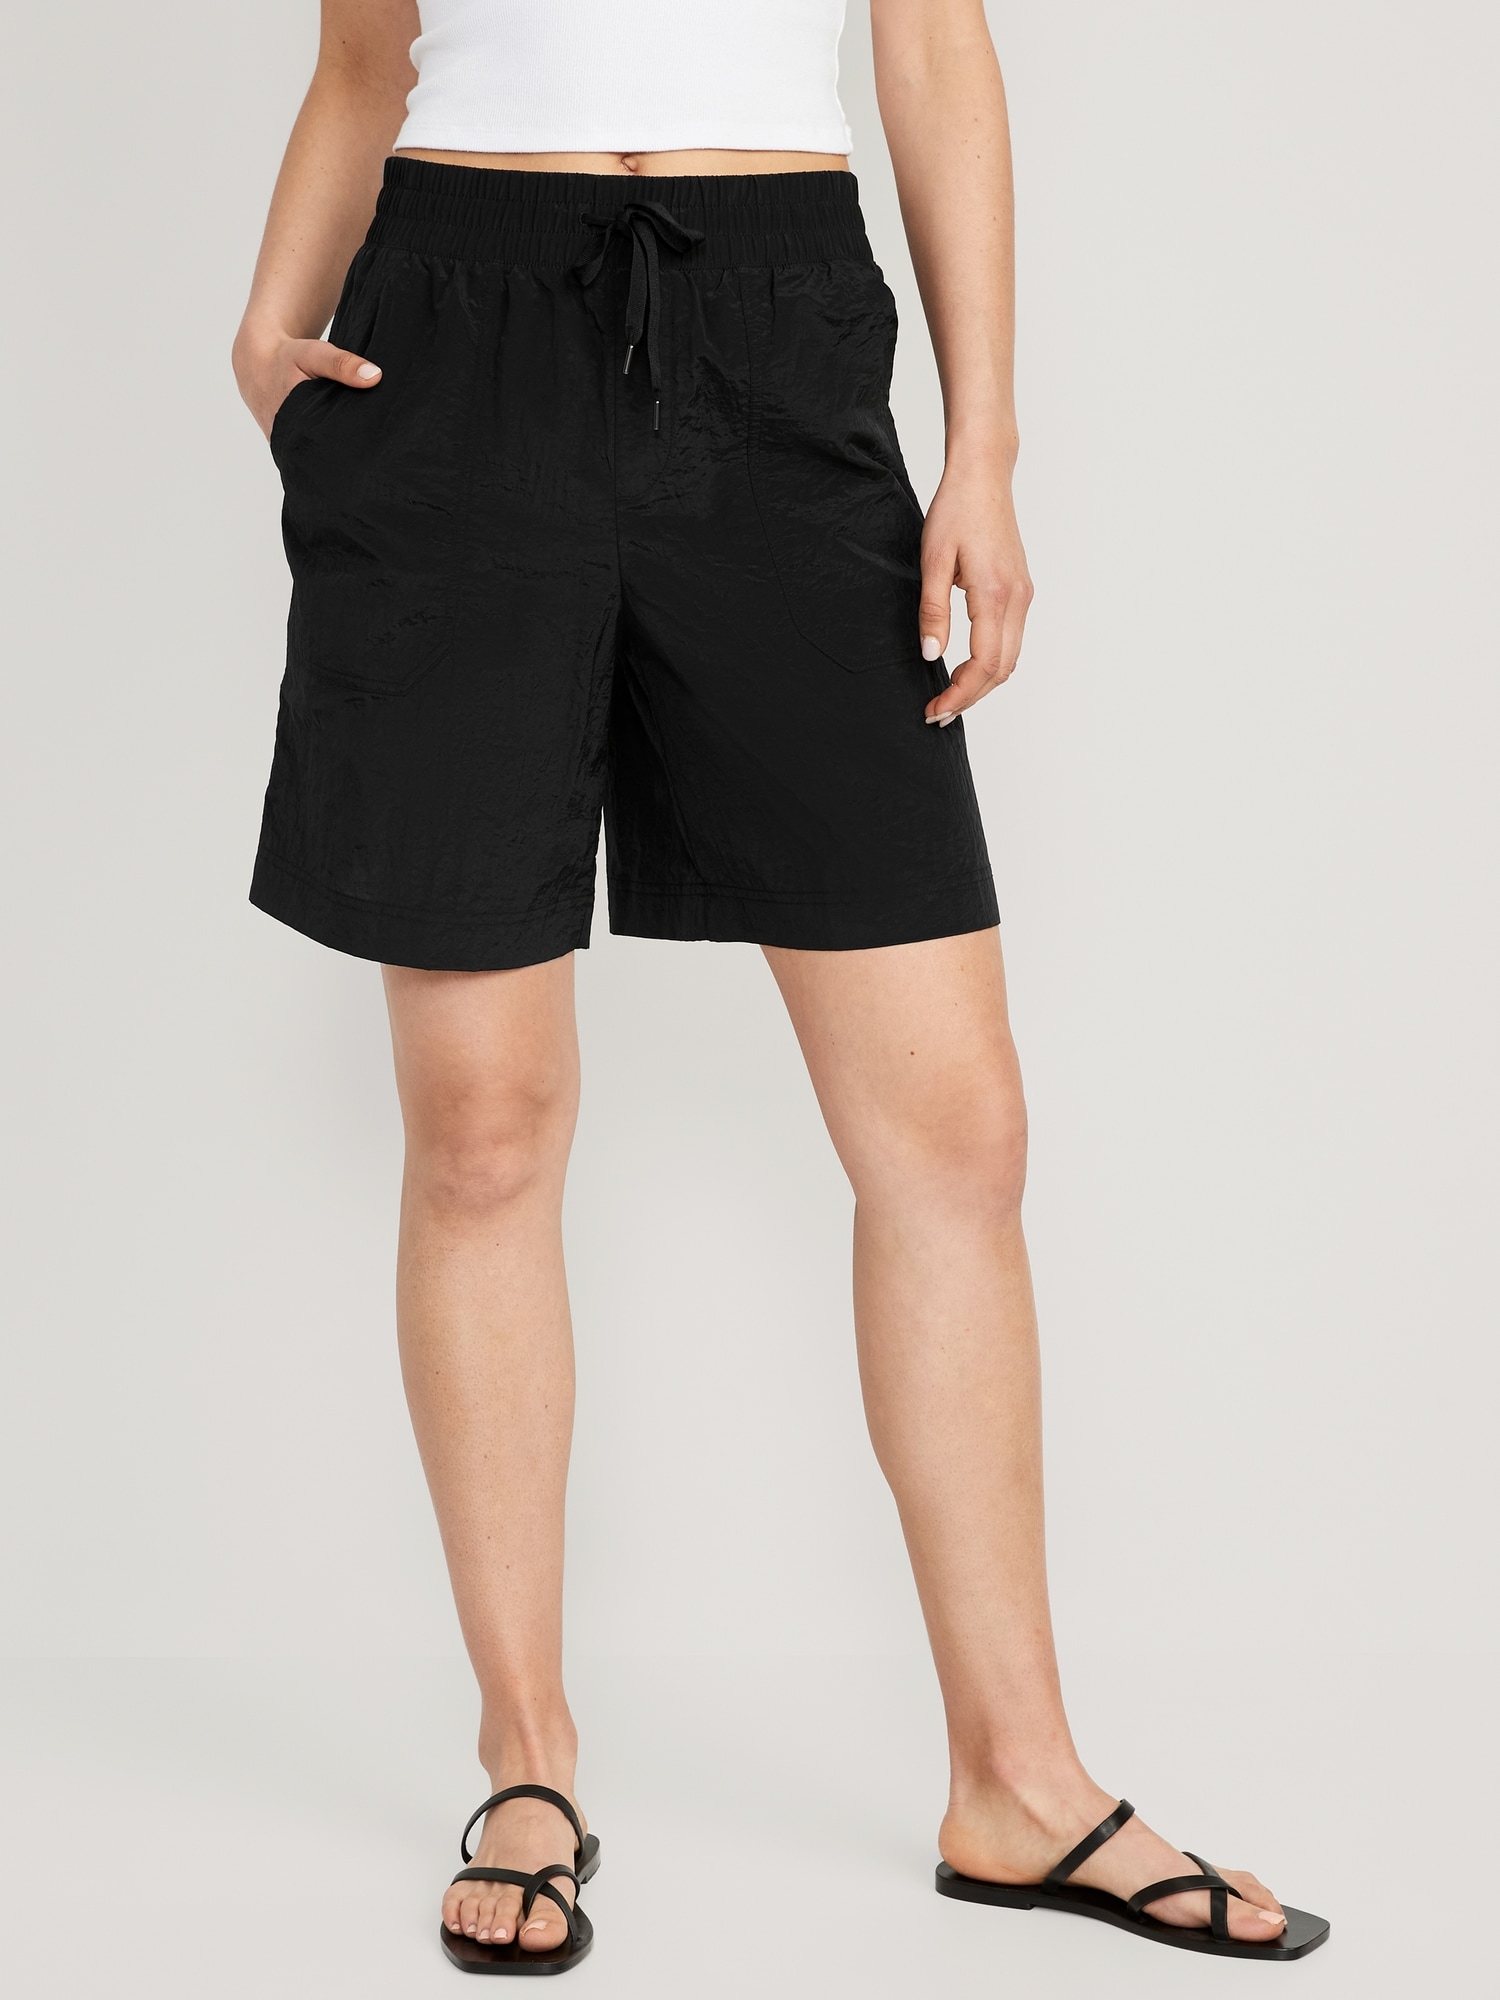 High-Waisted Bermuda Shorts -- 11-inch inseam